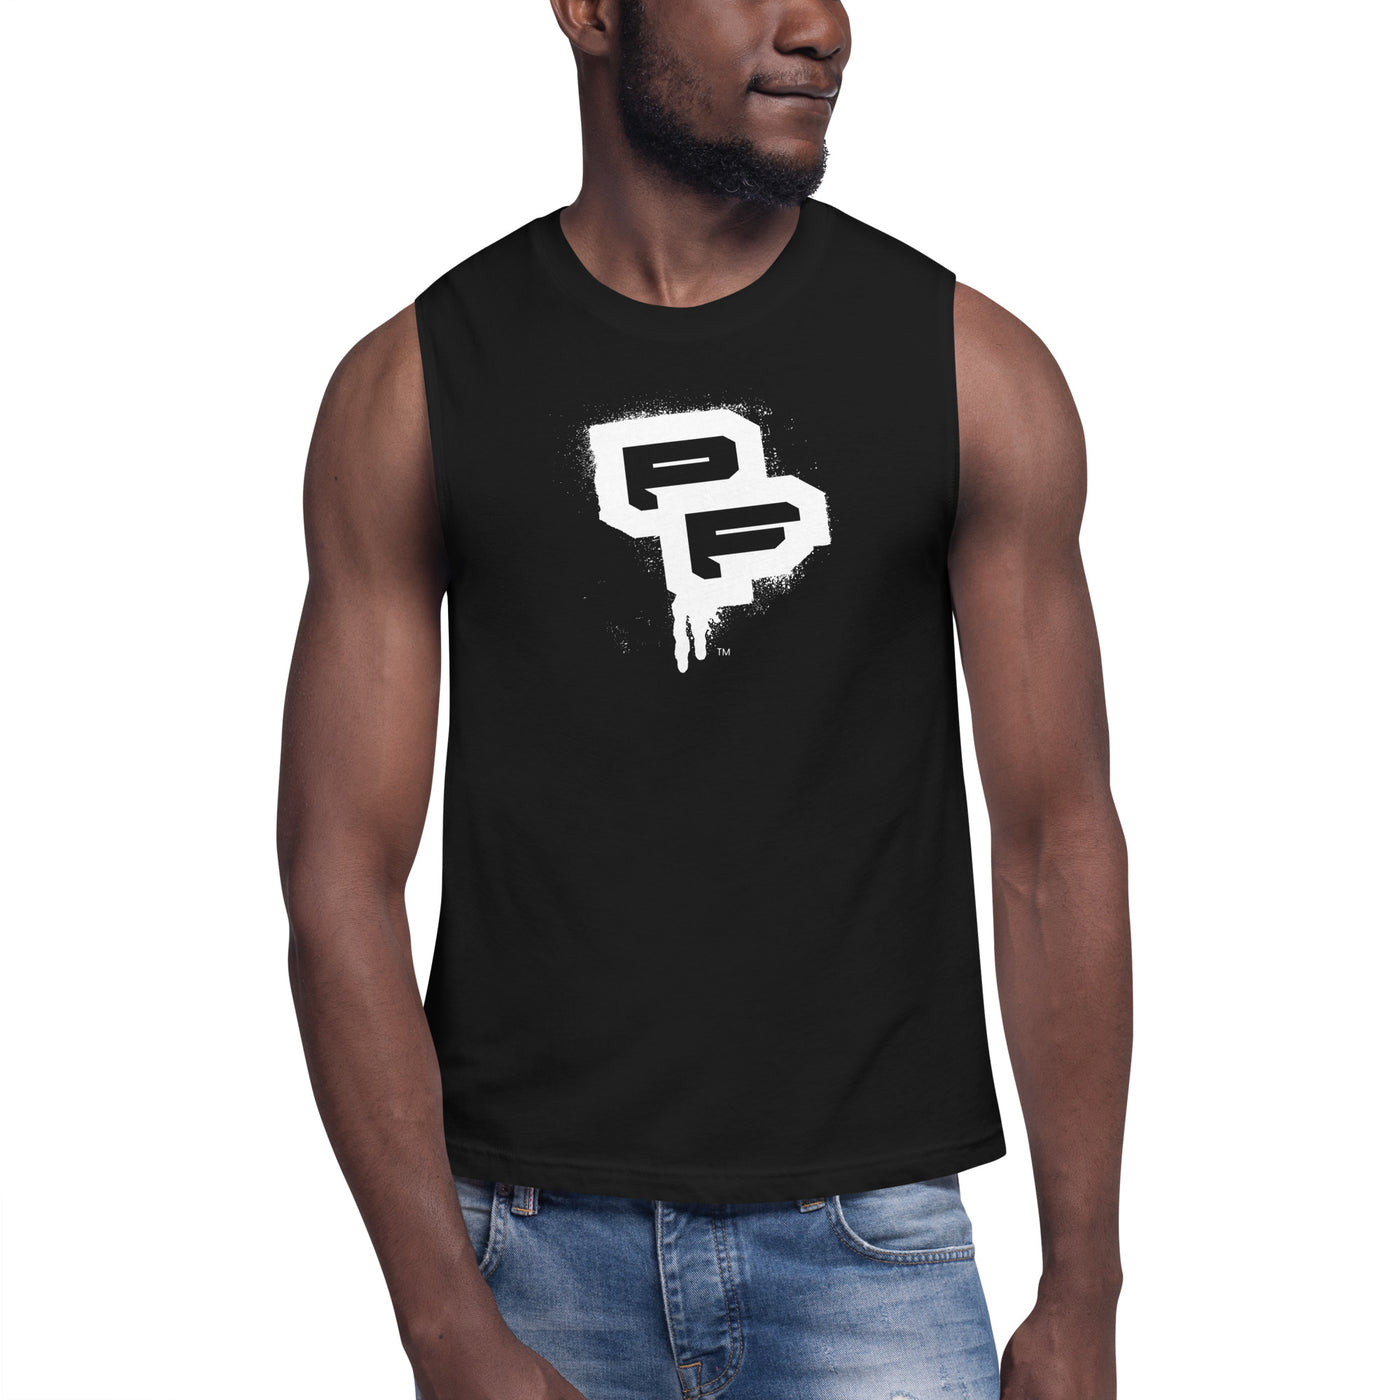 PF Black Muscle Shirt